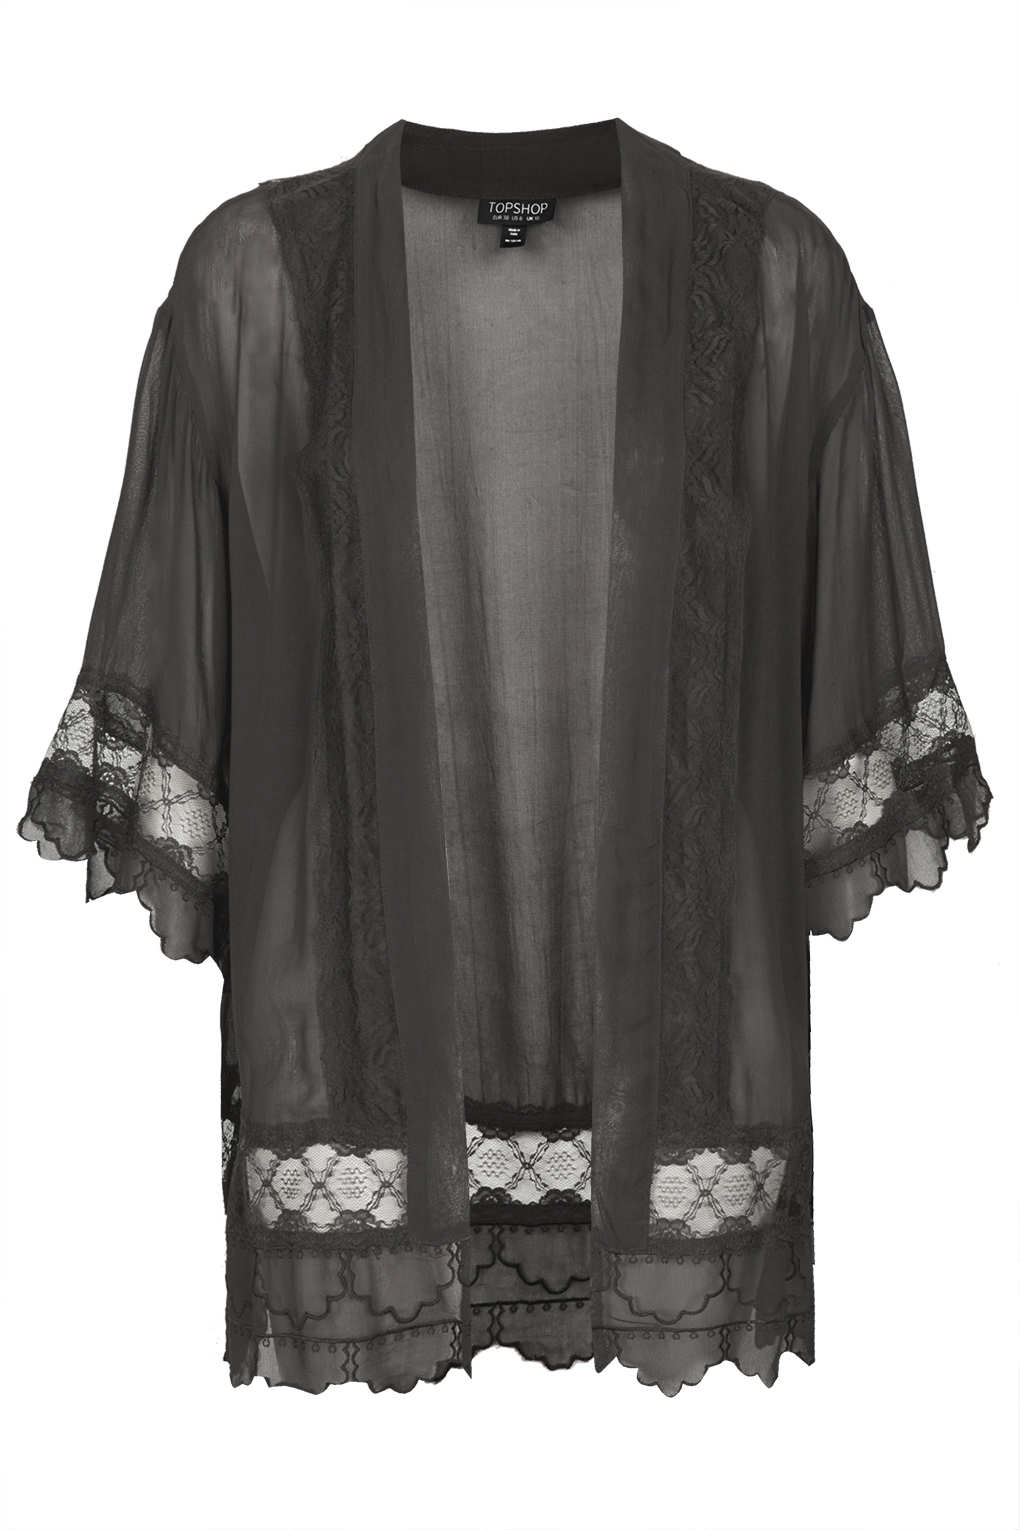 Lyst - Topshop Lace Detail Kimono in Gray